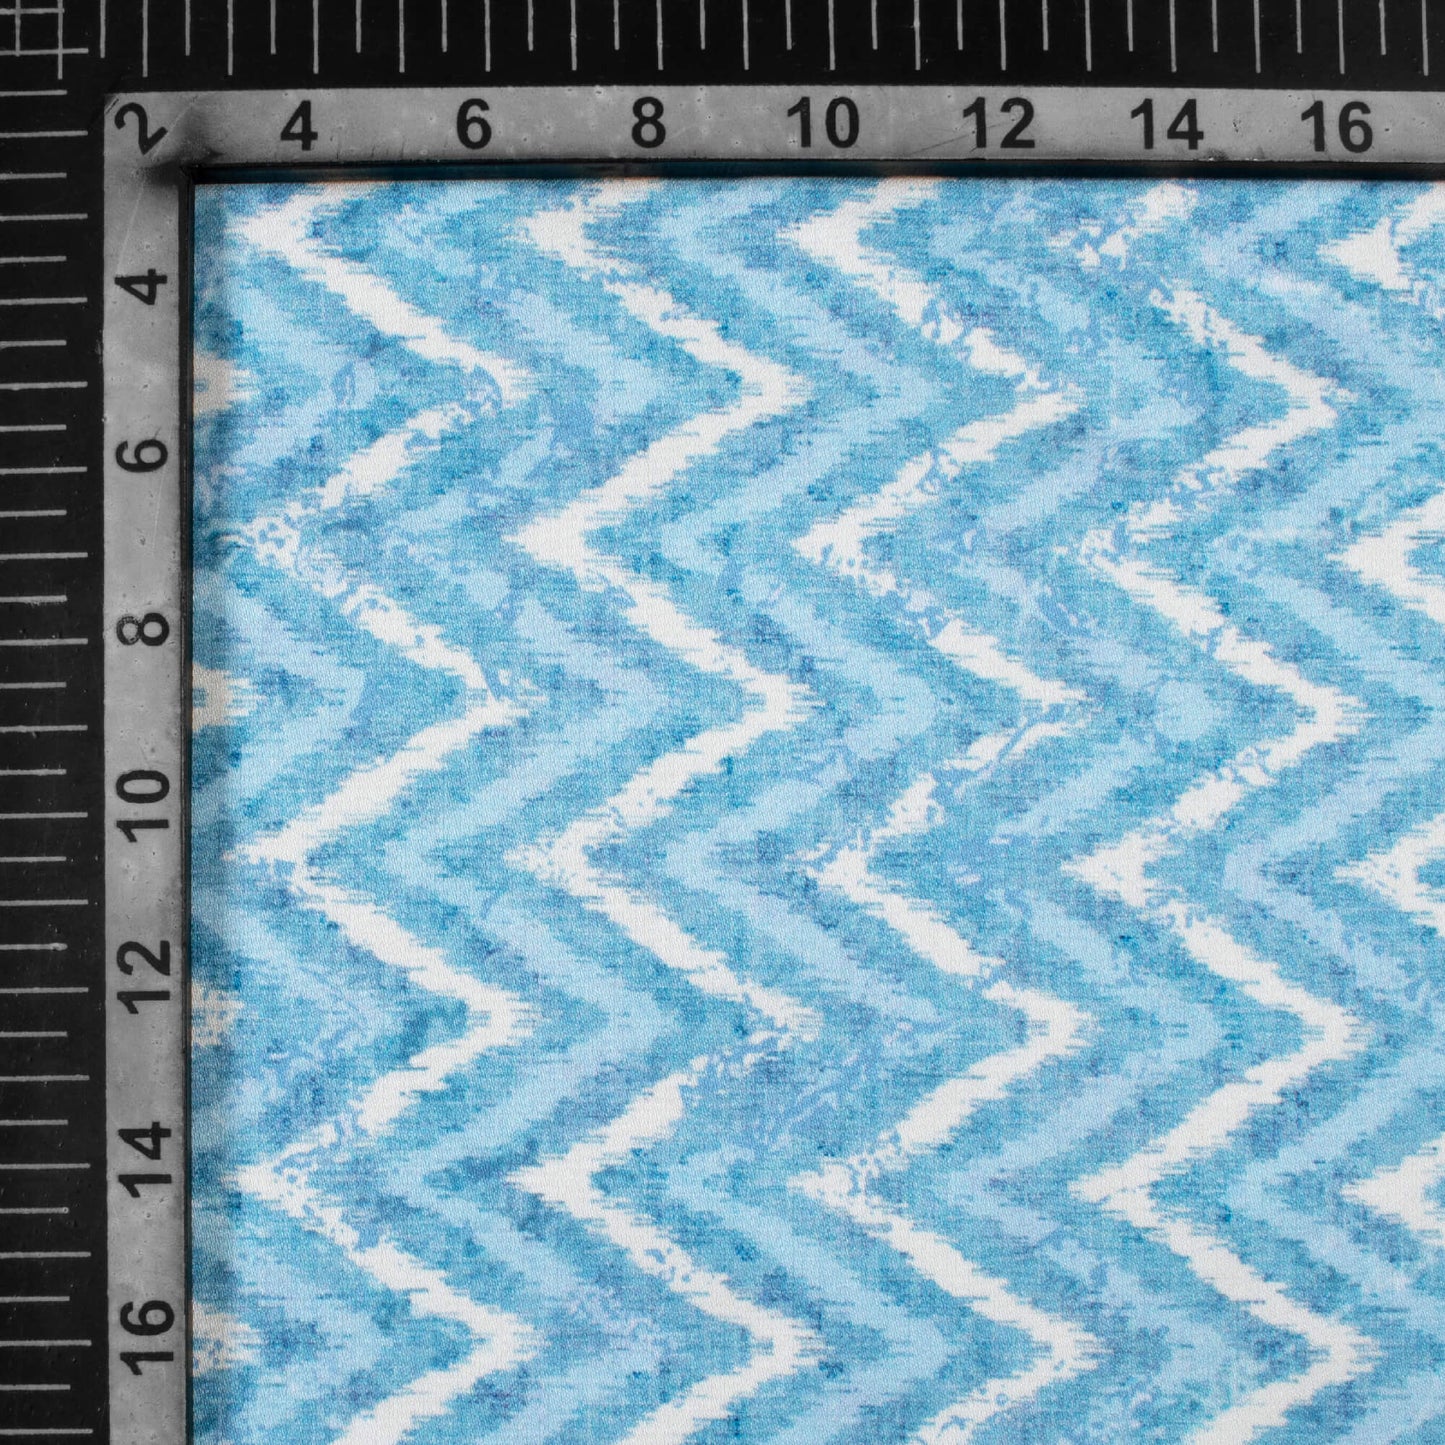 Steel Blue And White Chevron Pattern Digital Print Crepe Silk Fabric